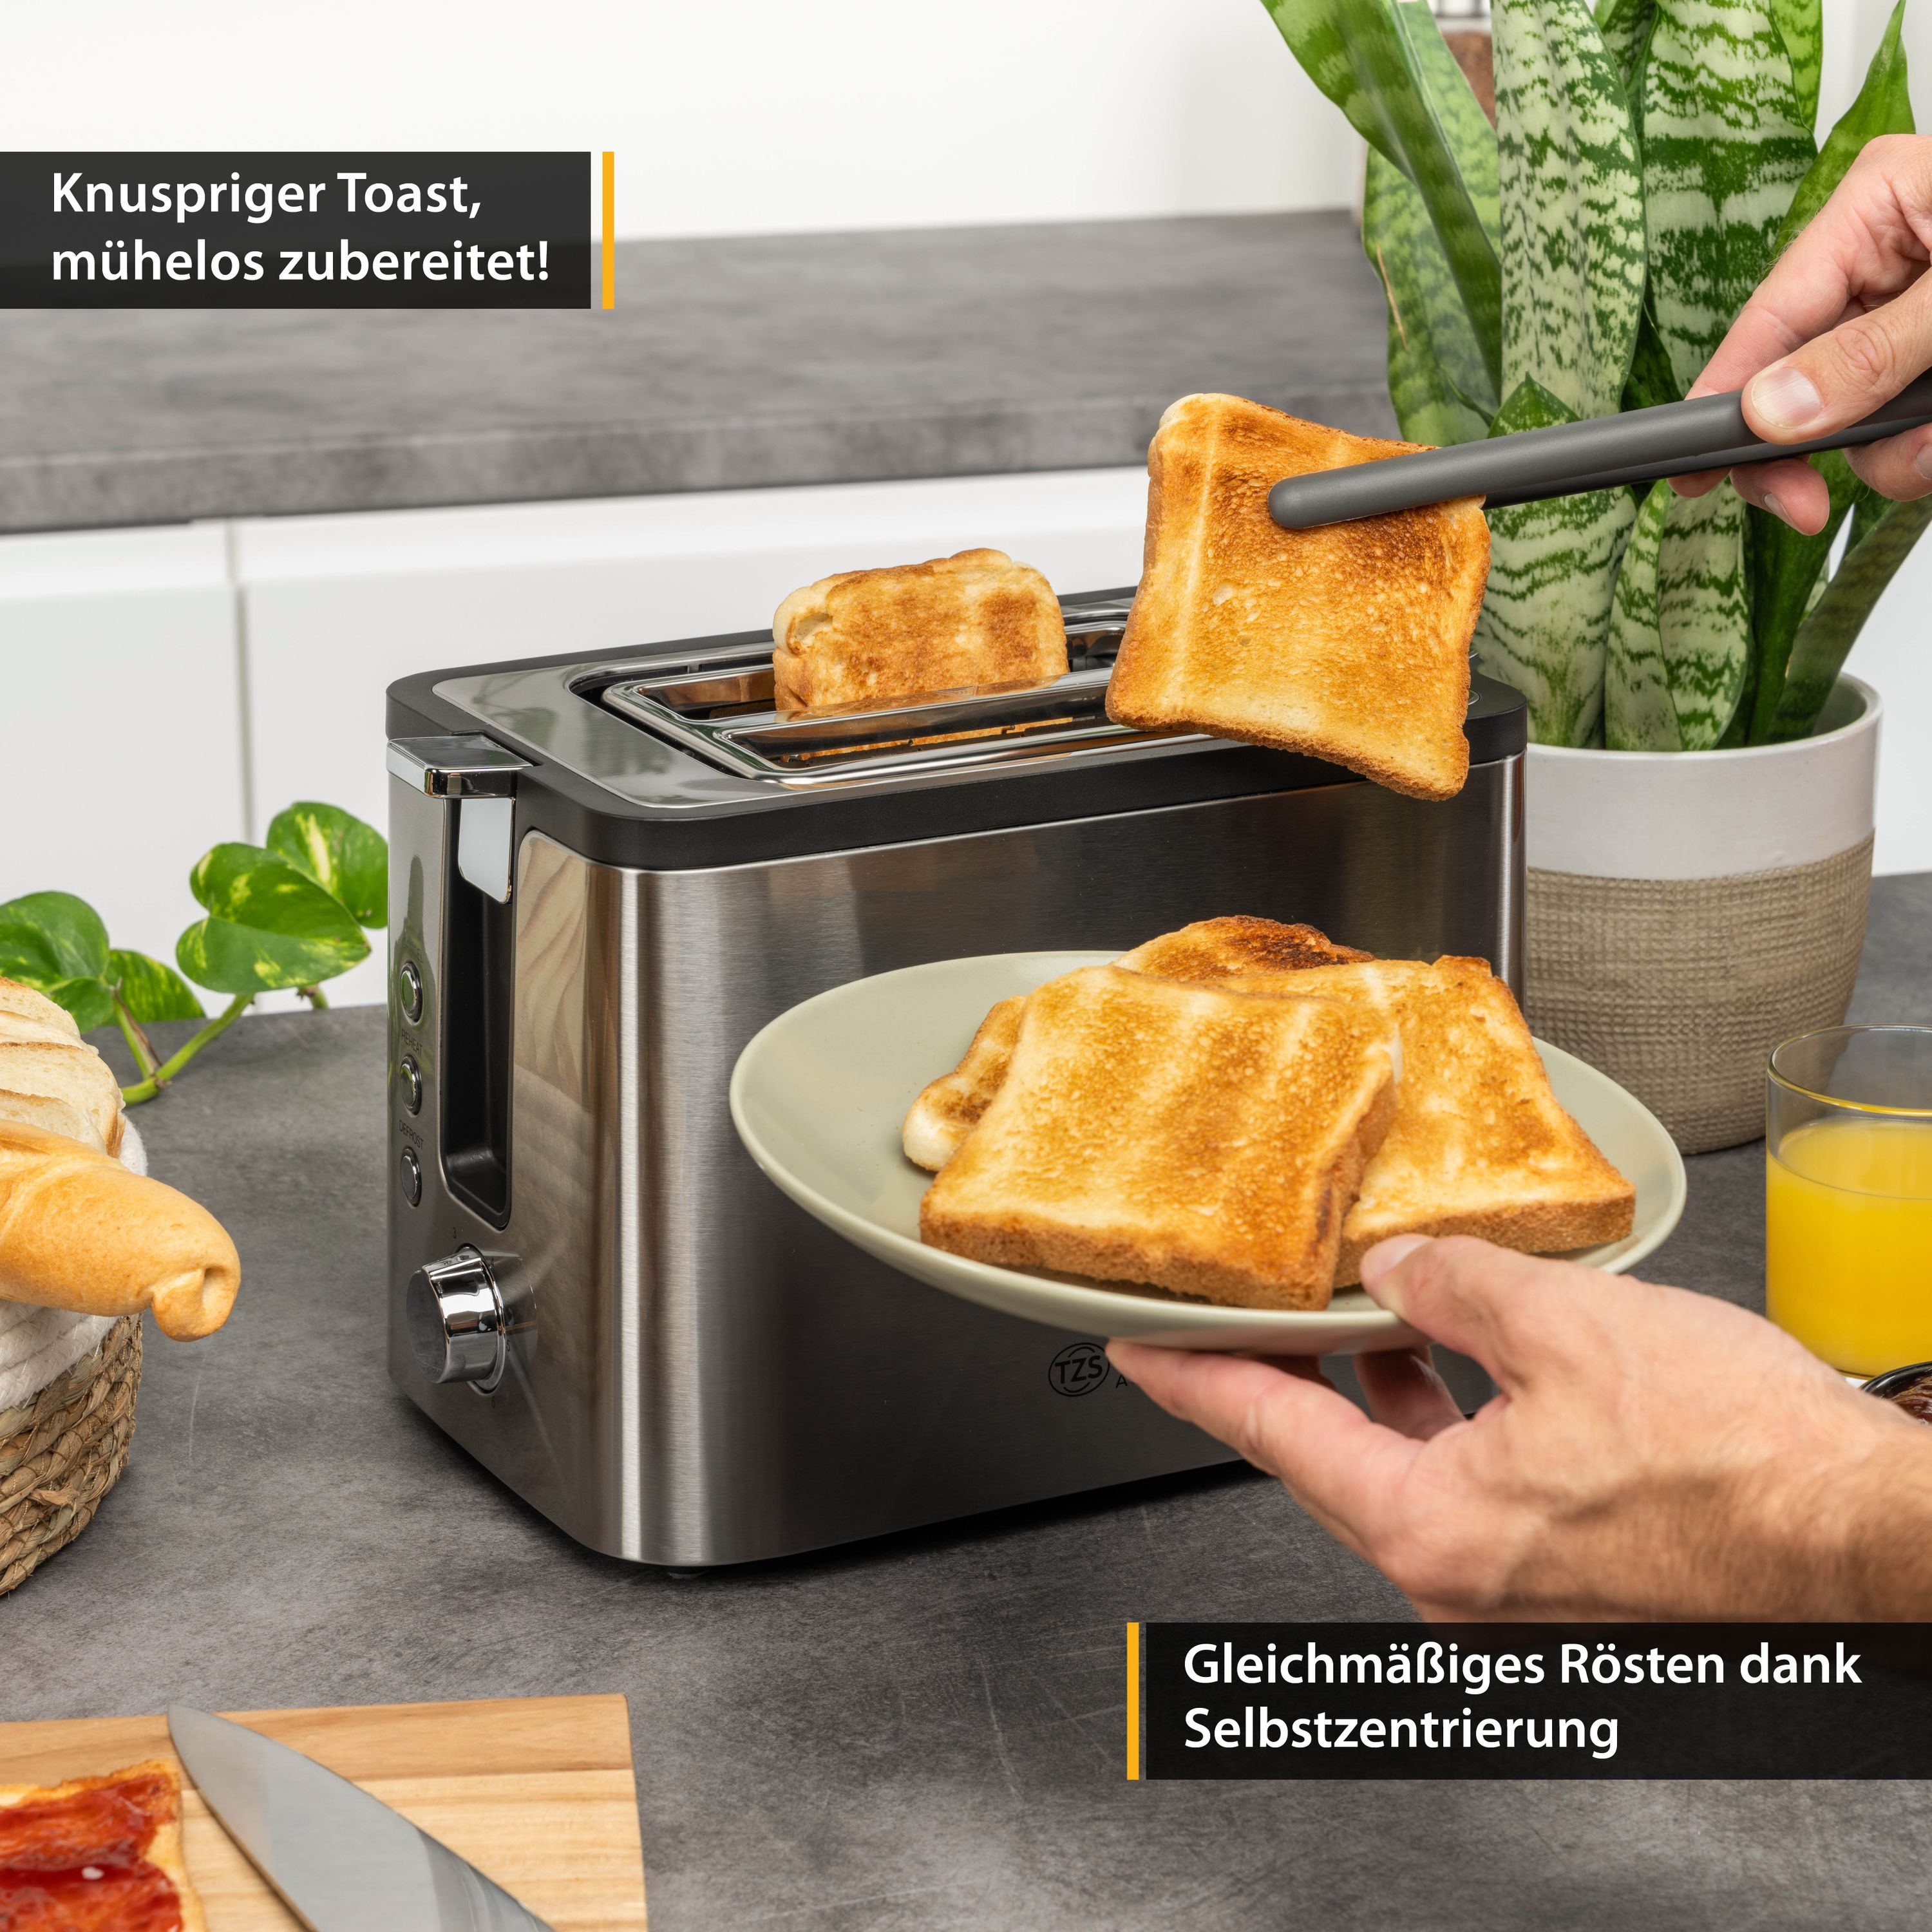 Toaster AUSTRIA 50 FIRST Schlitze: FA-5369-5 Watt, (800 TZS 2)